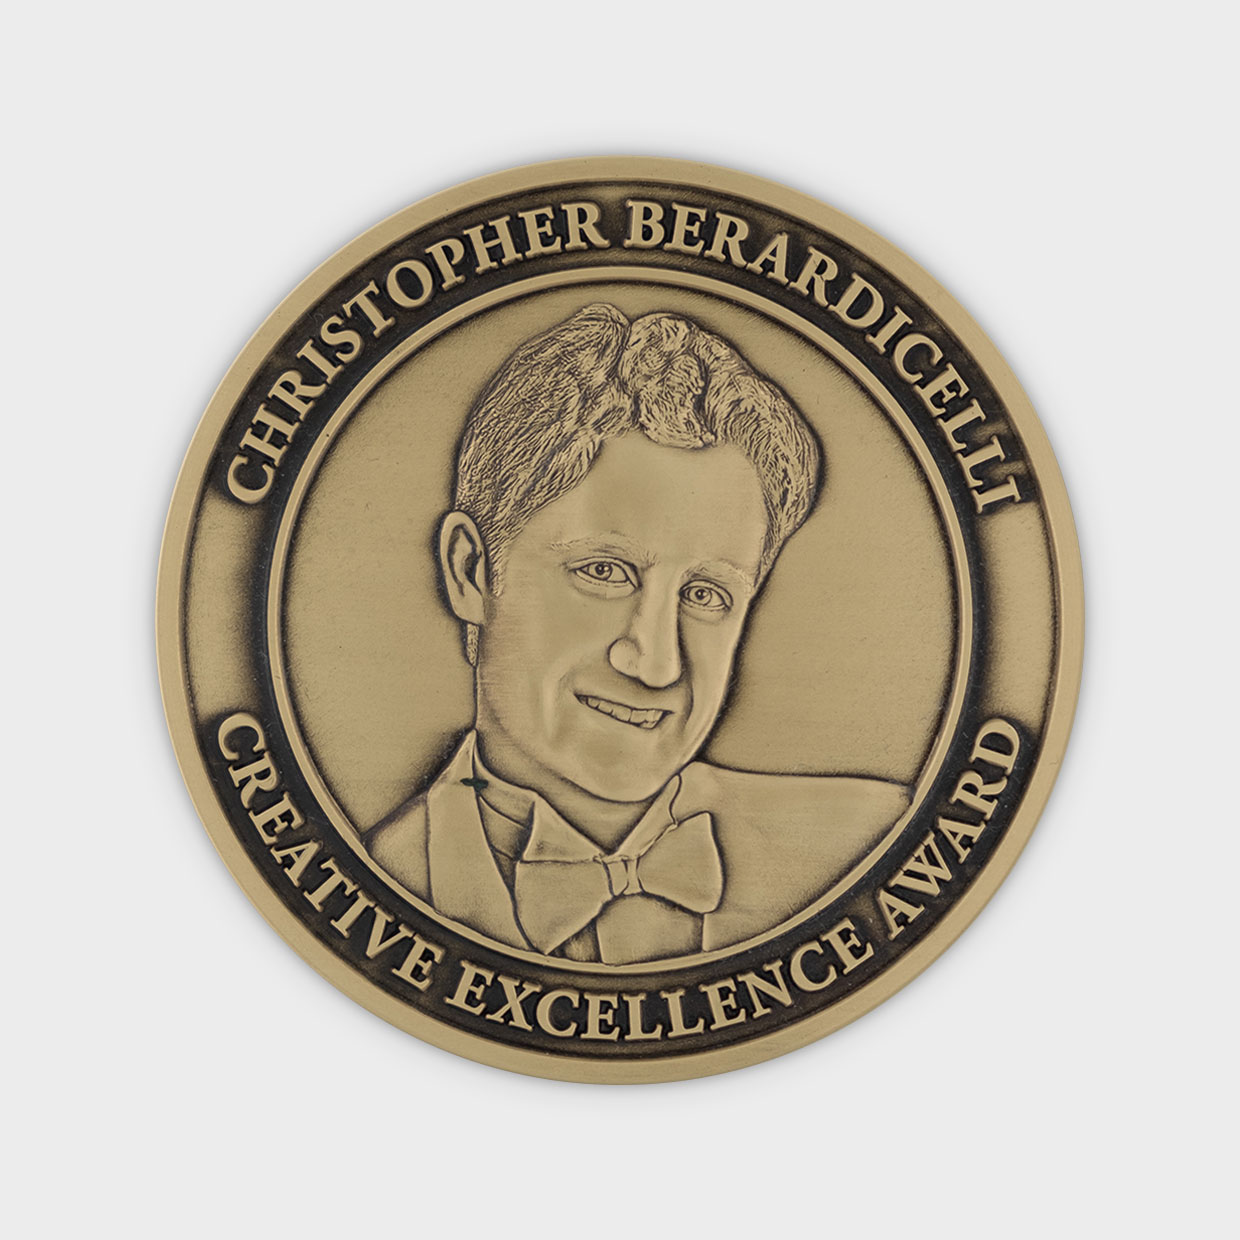 Christopher Berardicelli Creative Excellence Award Obverse